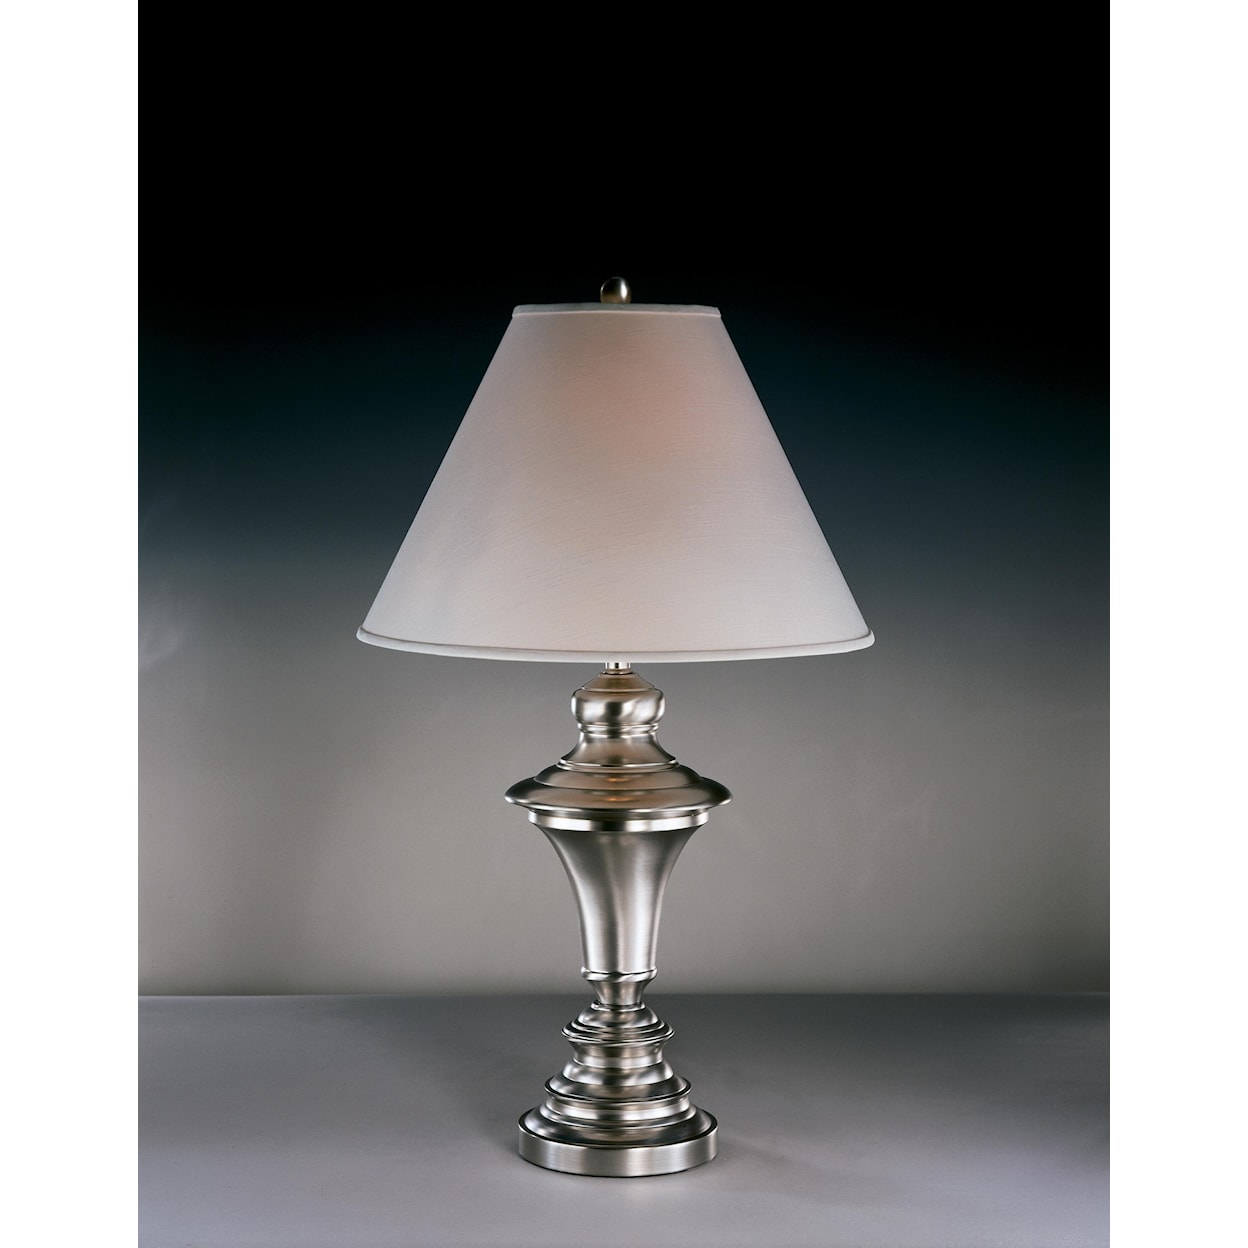 Ashley Furniture Signature Design Lamps - Contemporary Set of 2 Almira Table Lamps